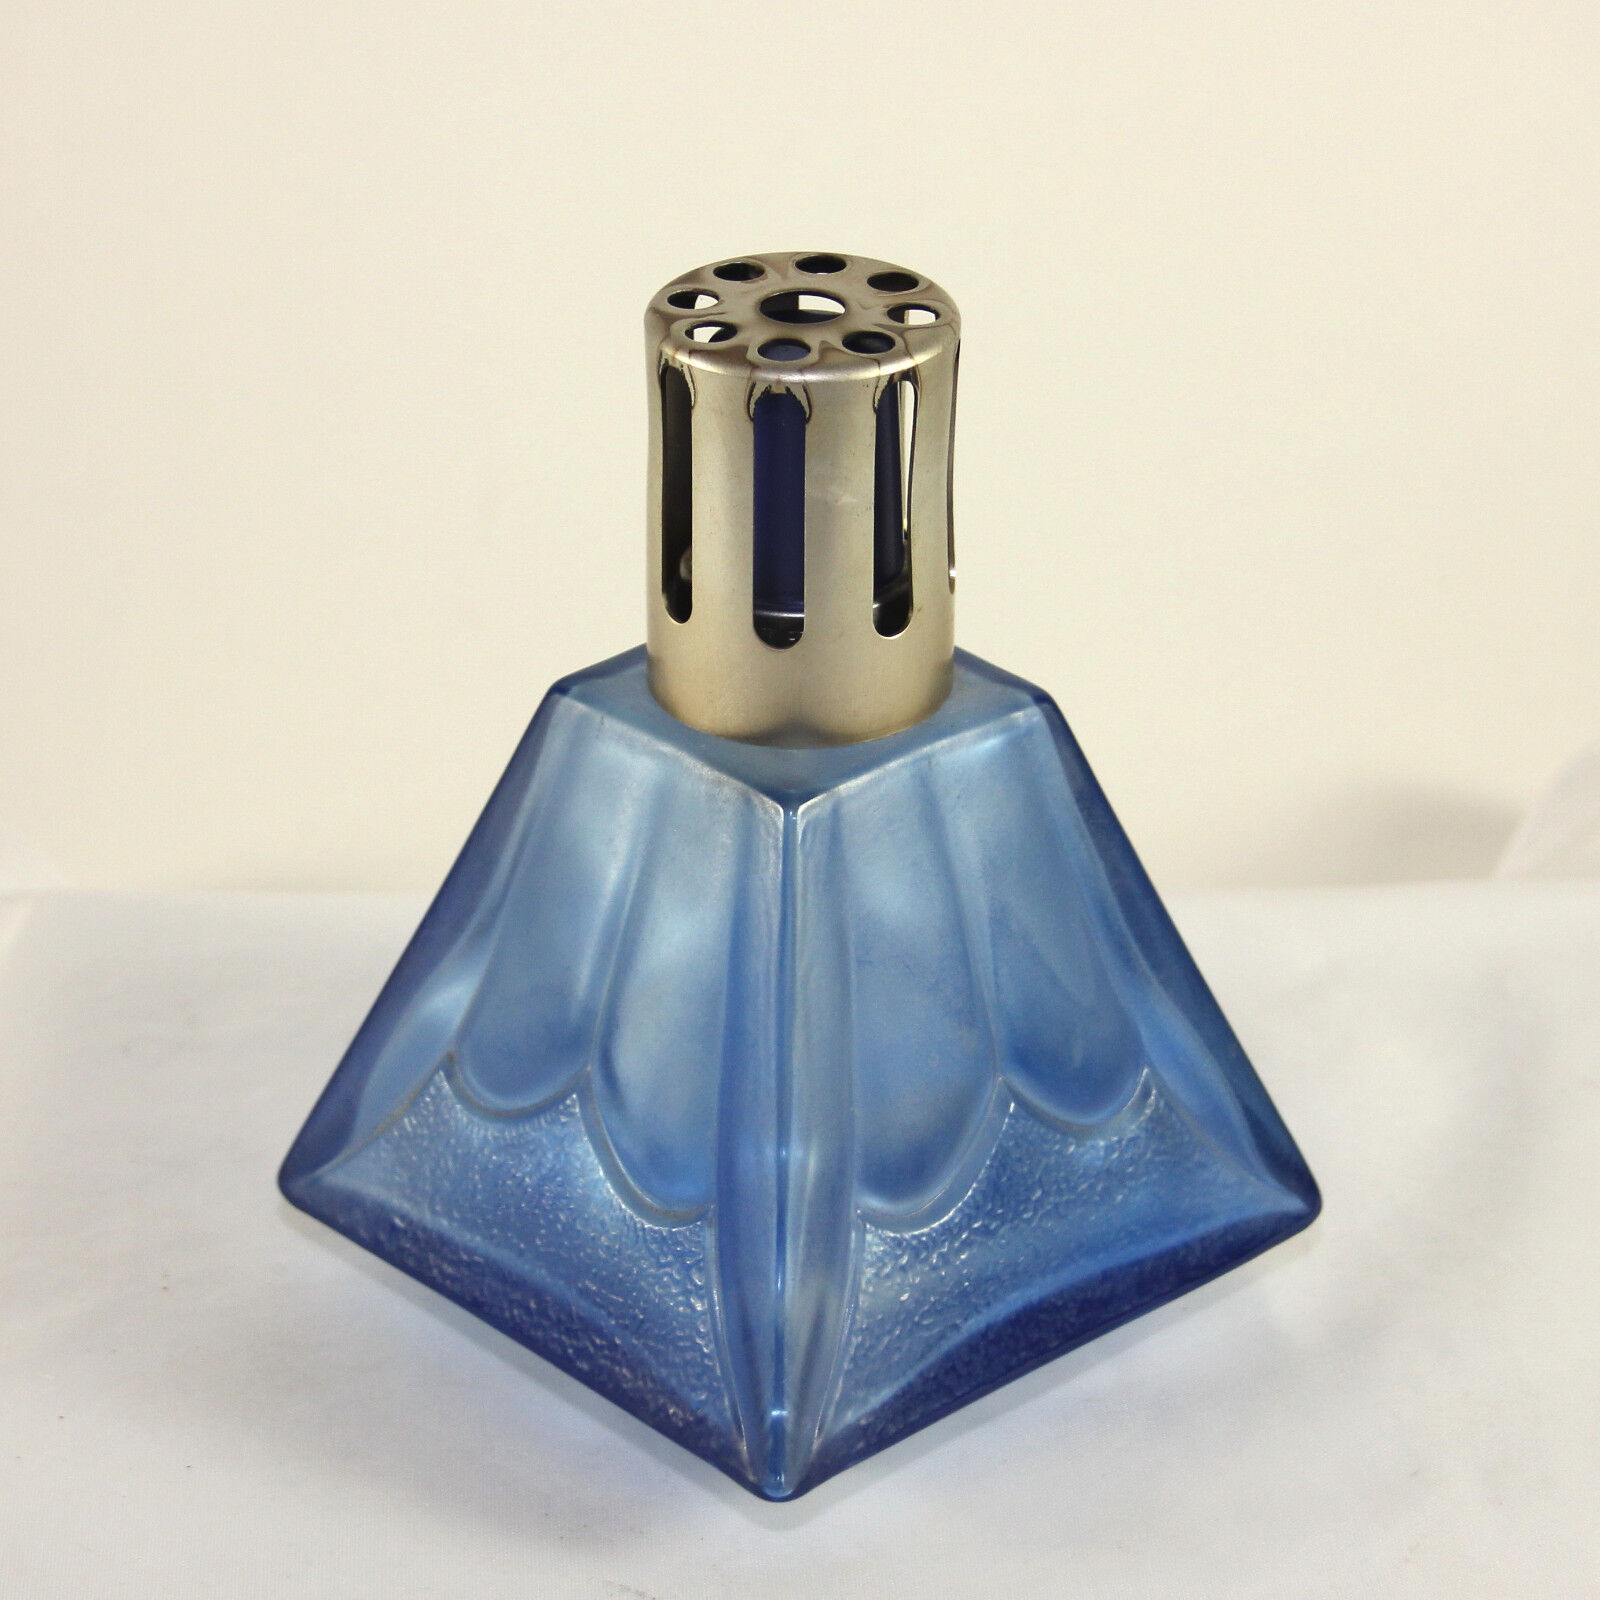 Vintage Art Deco French Lampe Berger, brule parfum, blue glass